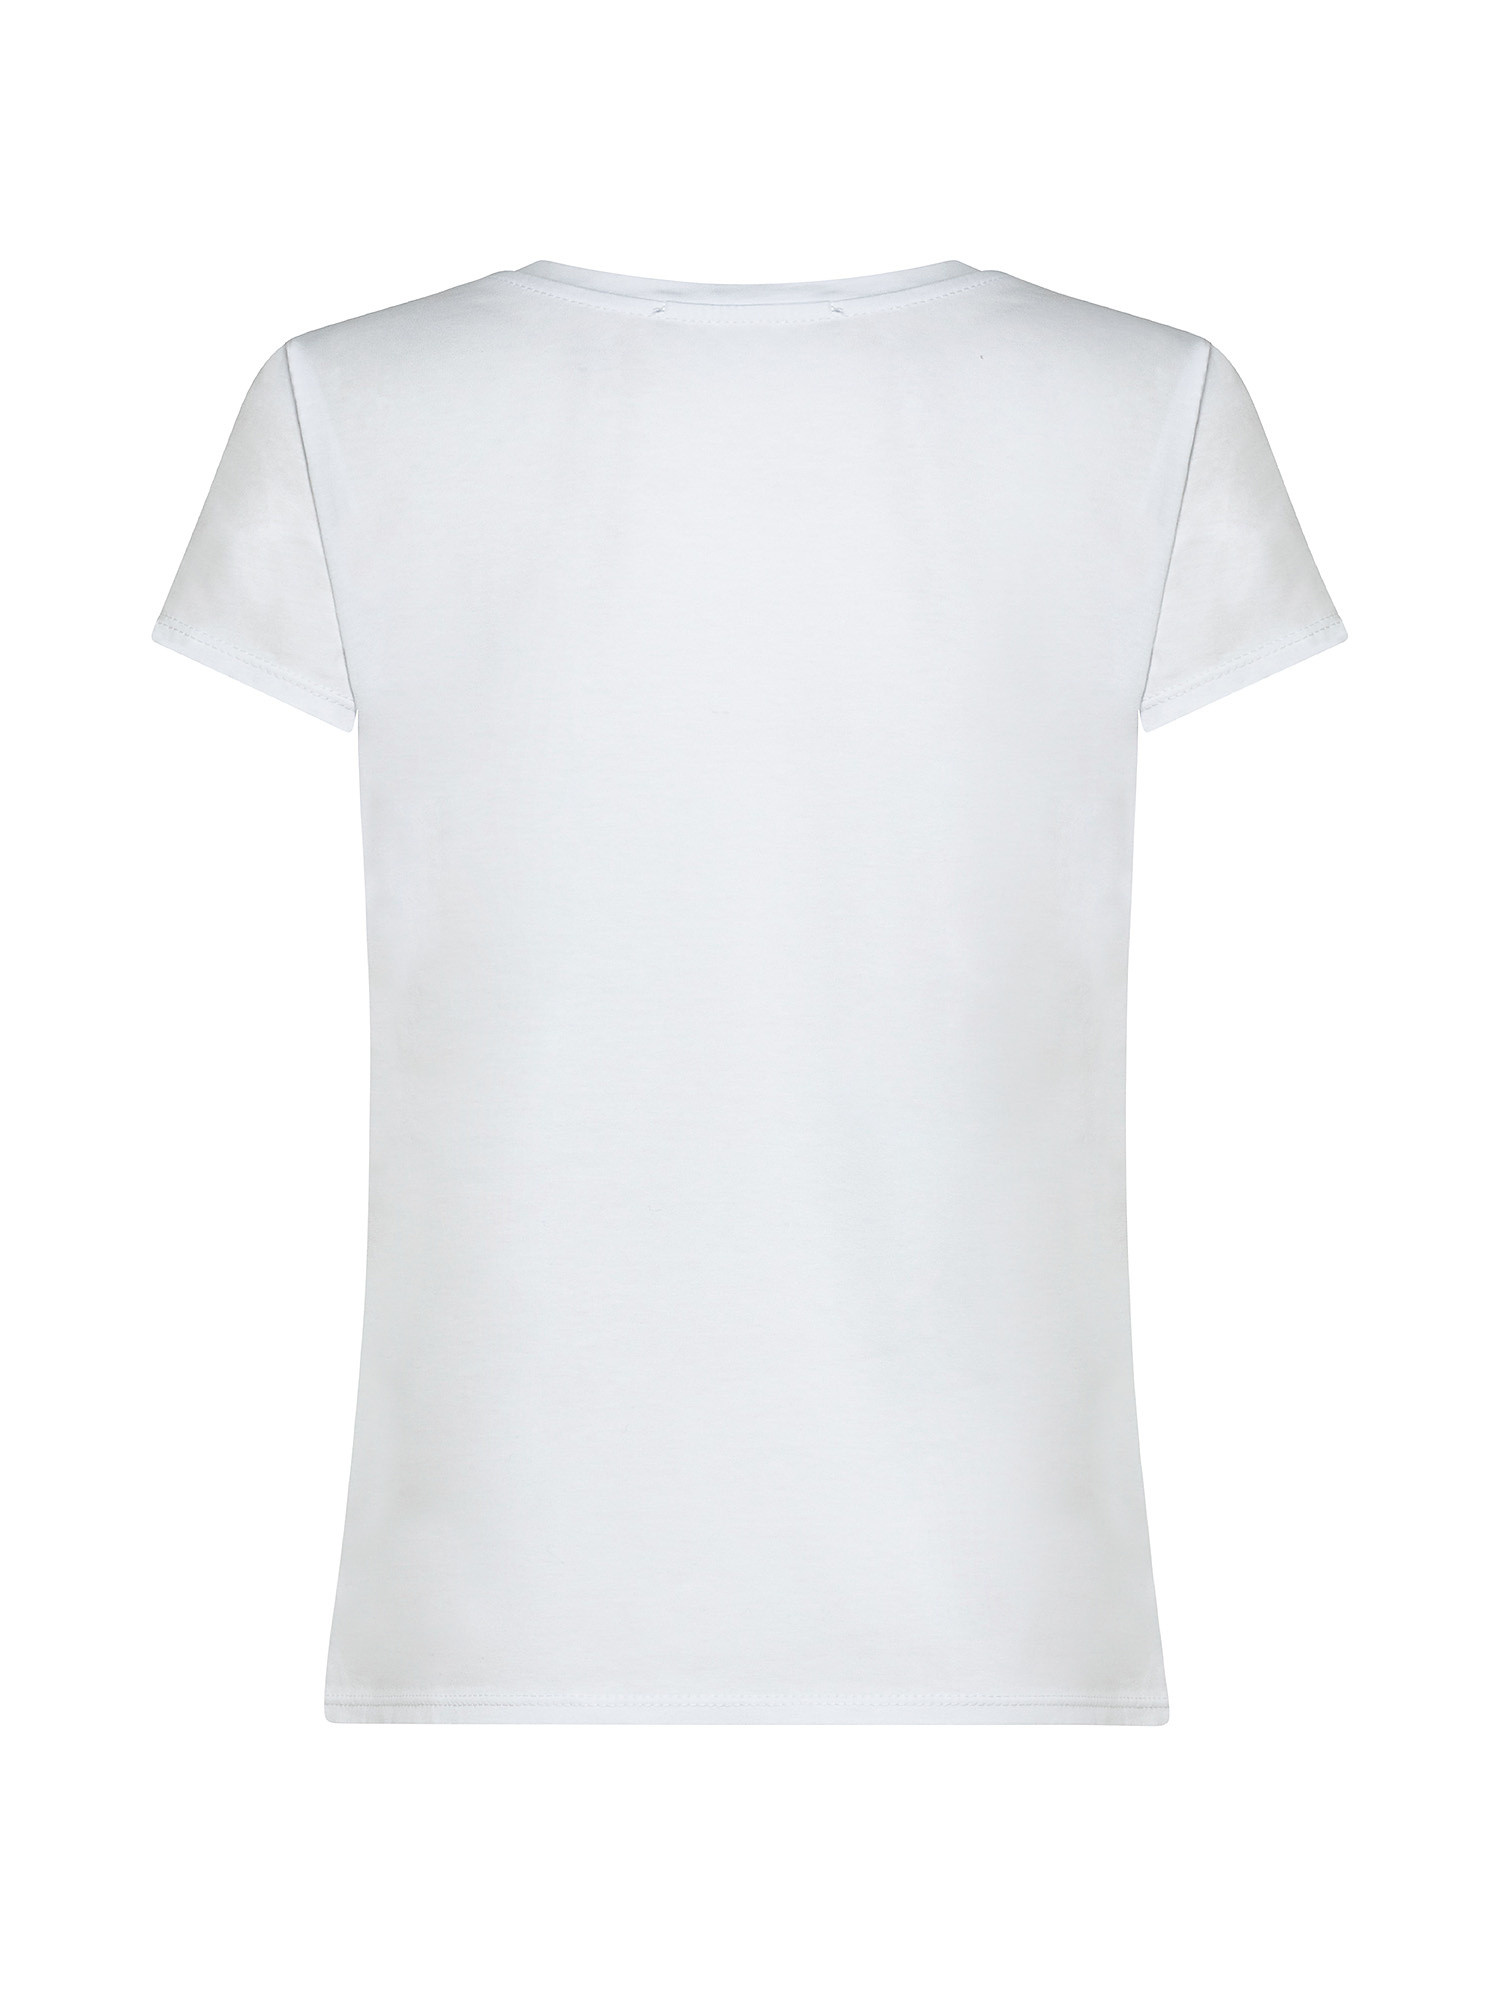 T-shirt girocollo con fiori, Bianco, large image number 1